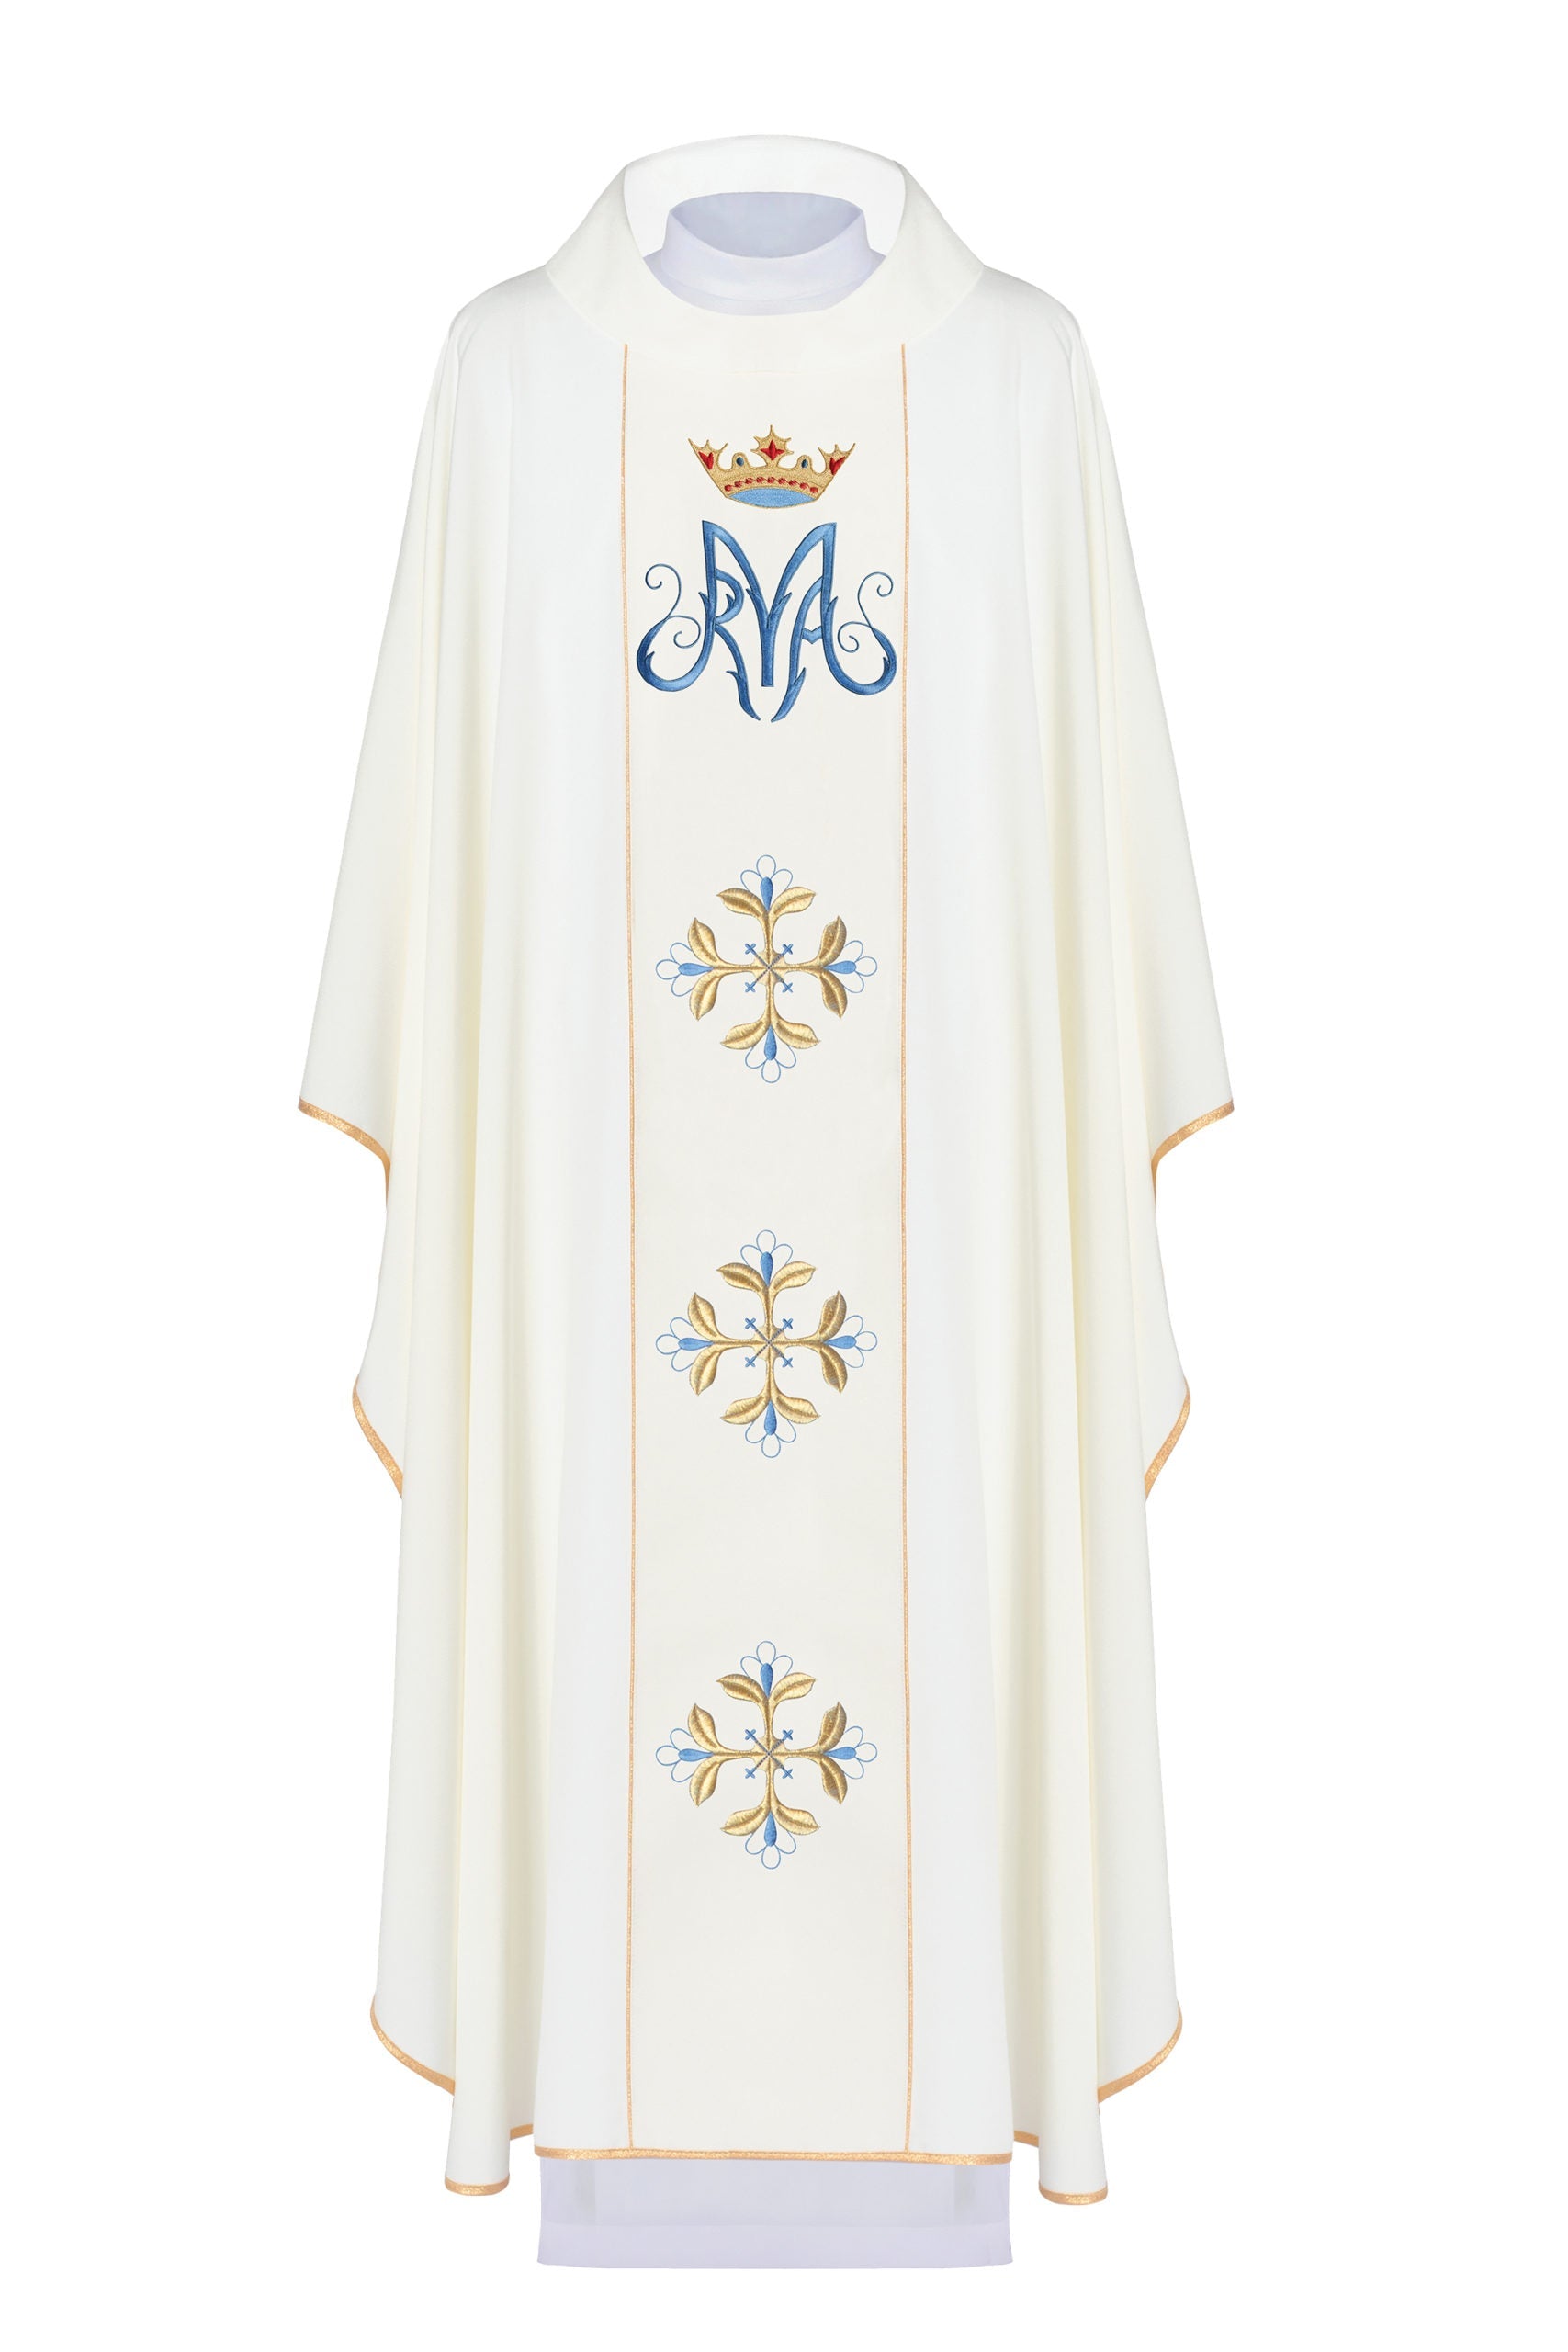 Maryjny ornat liturgiczny z pasem